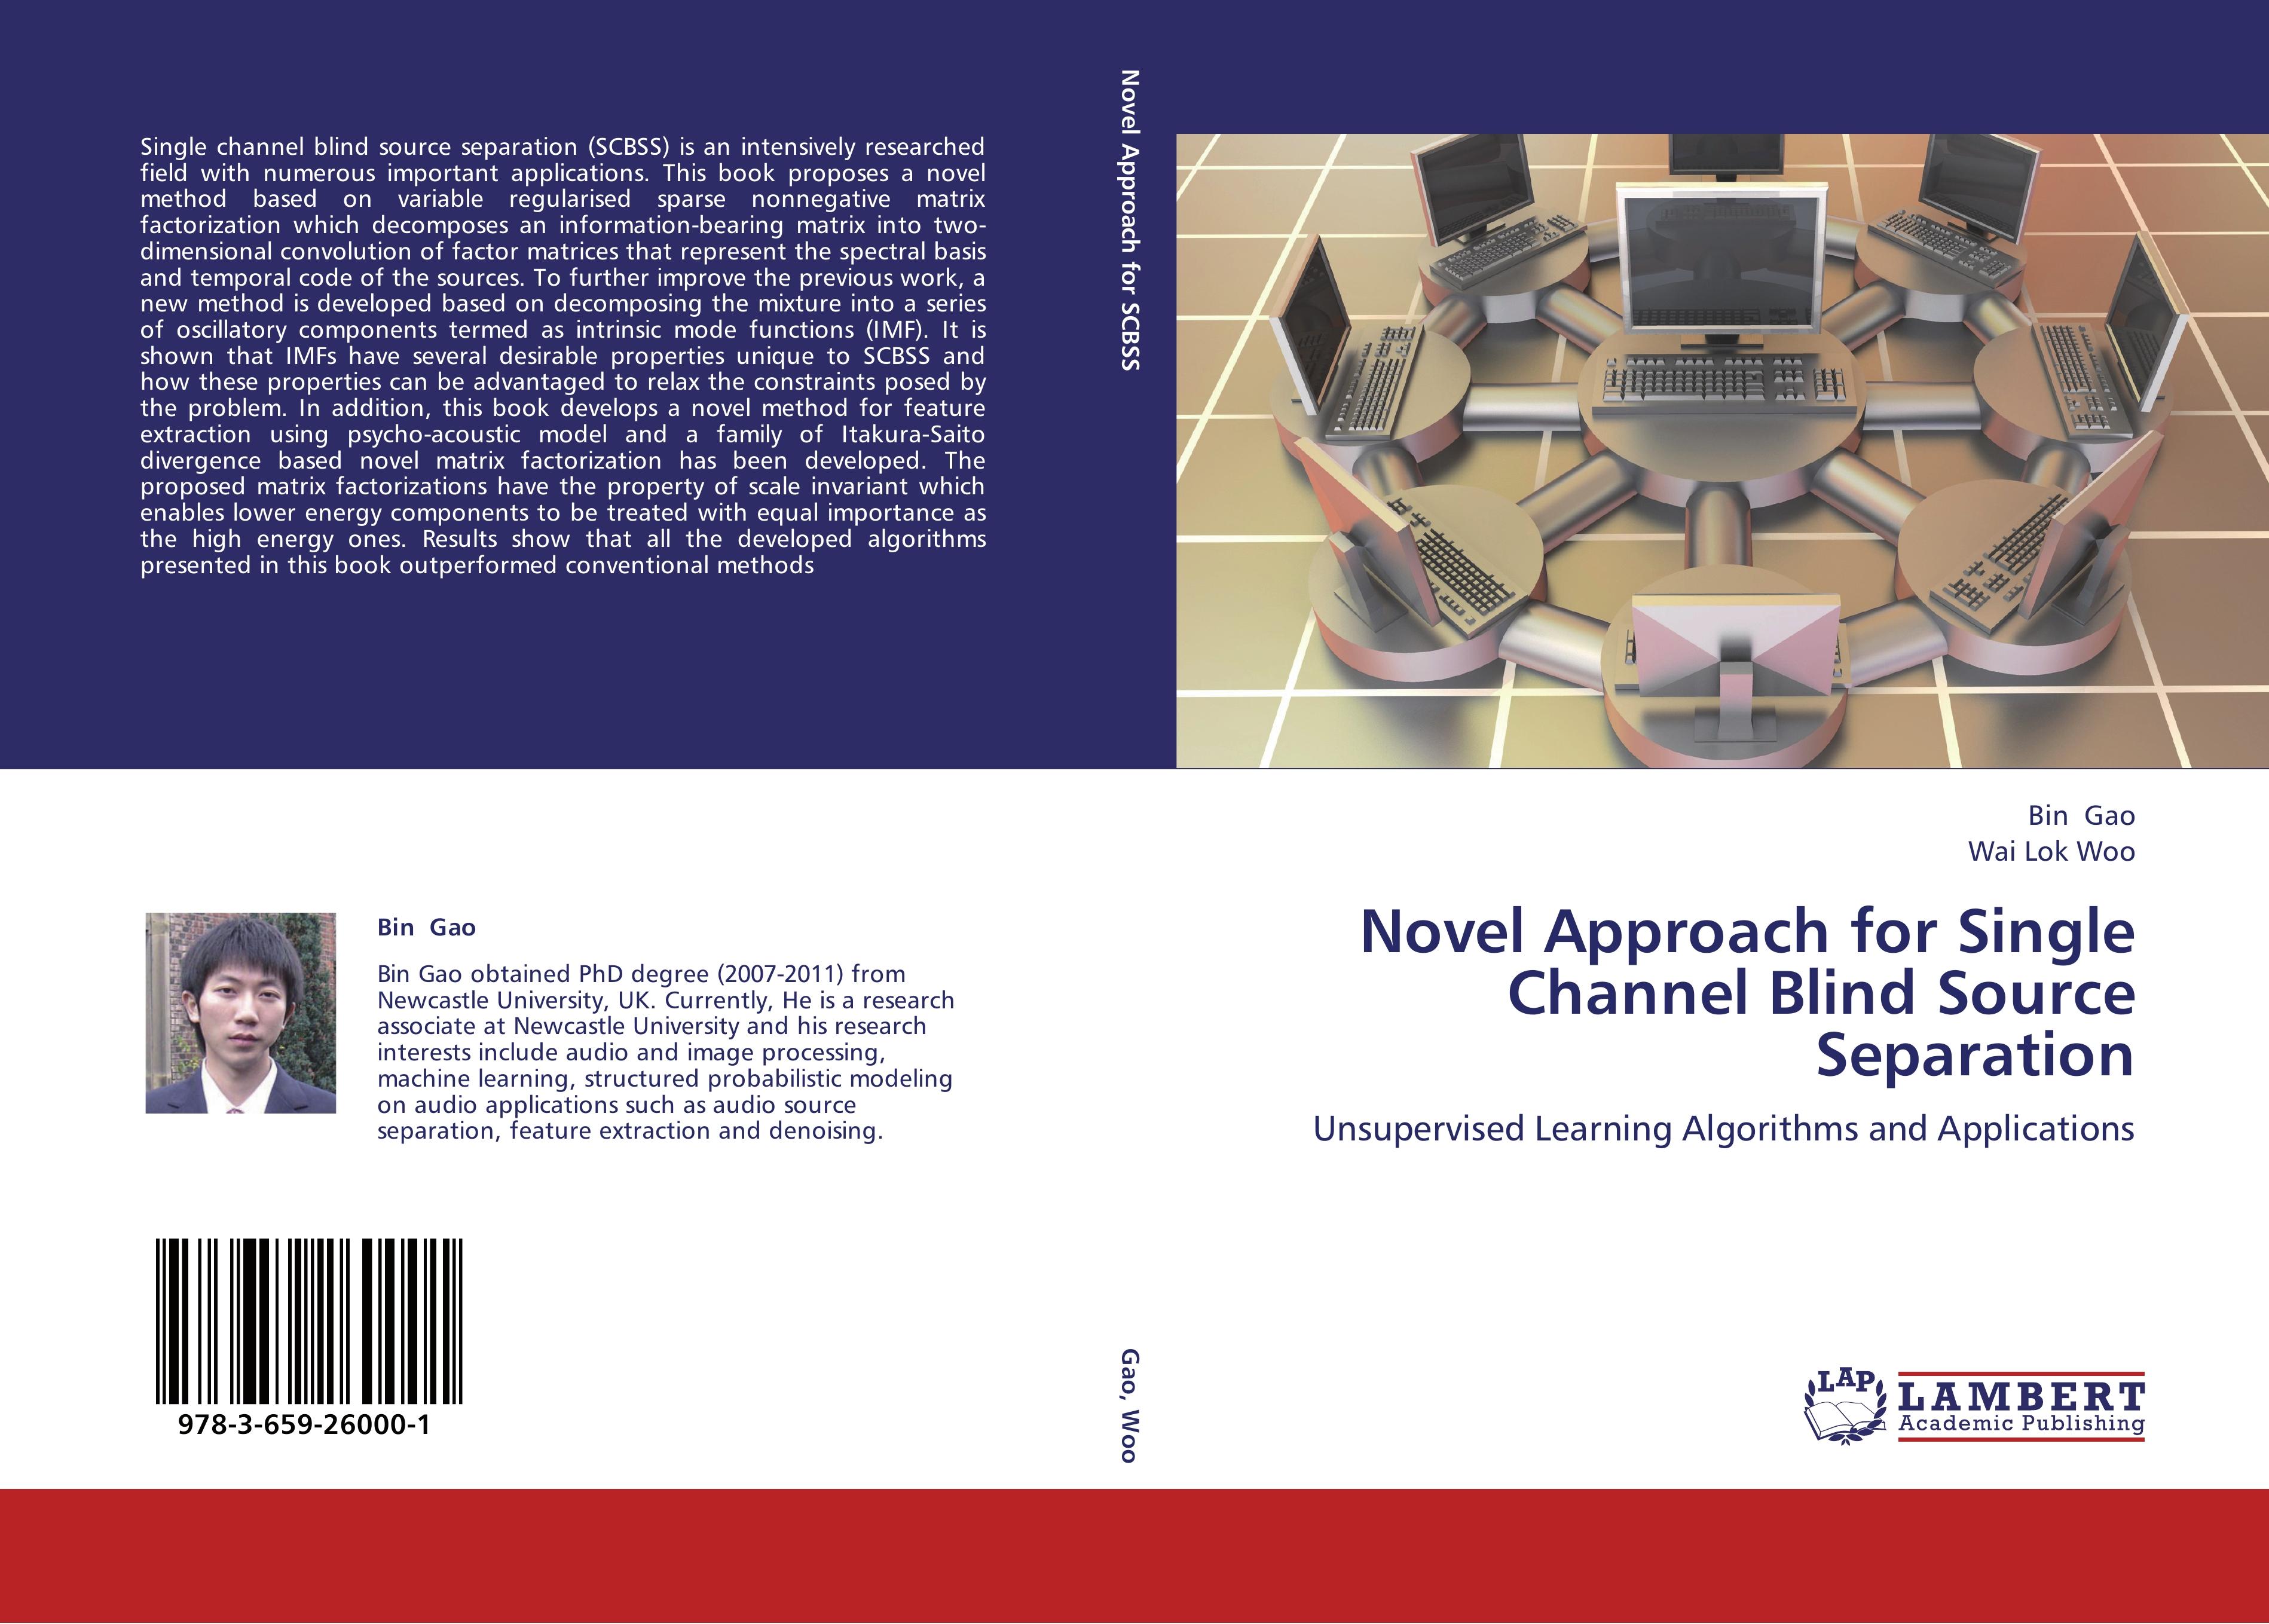 Novel Approach for Single Channel Blind Source Separation - Bin Gao|Wai Lok Woo